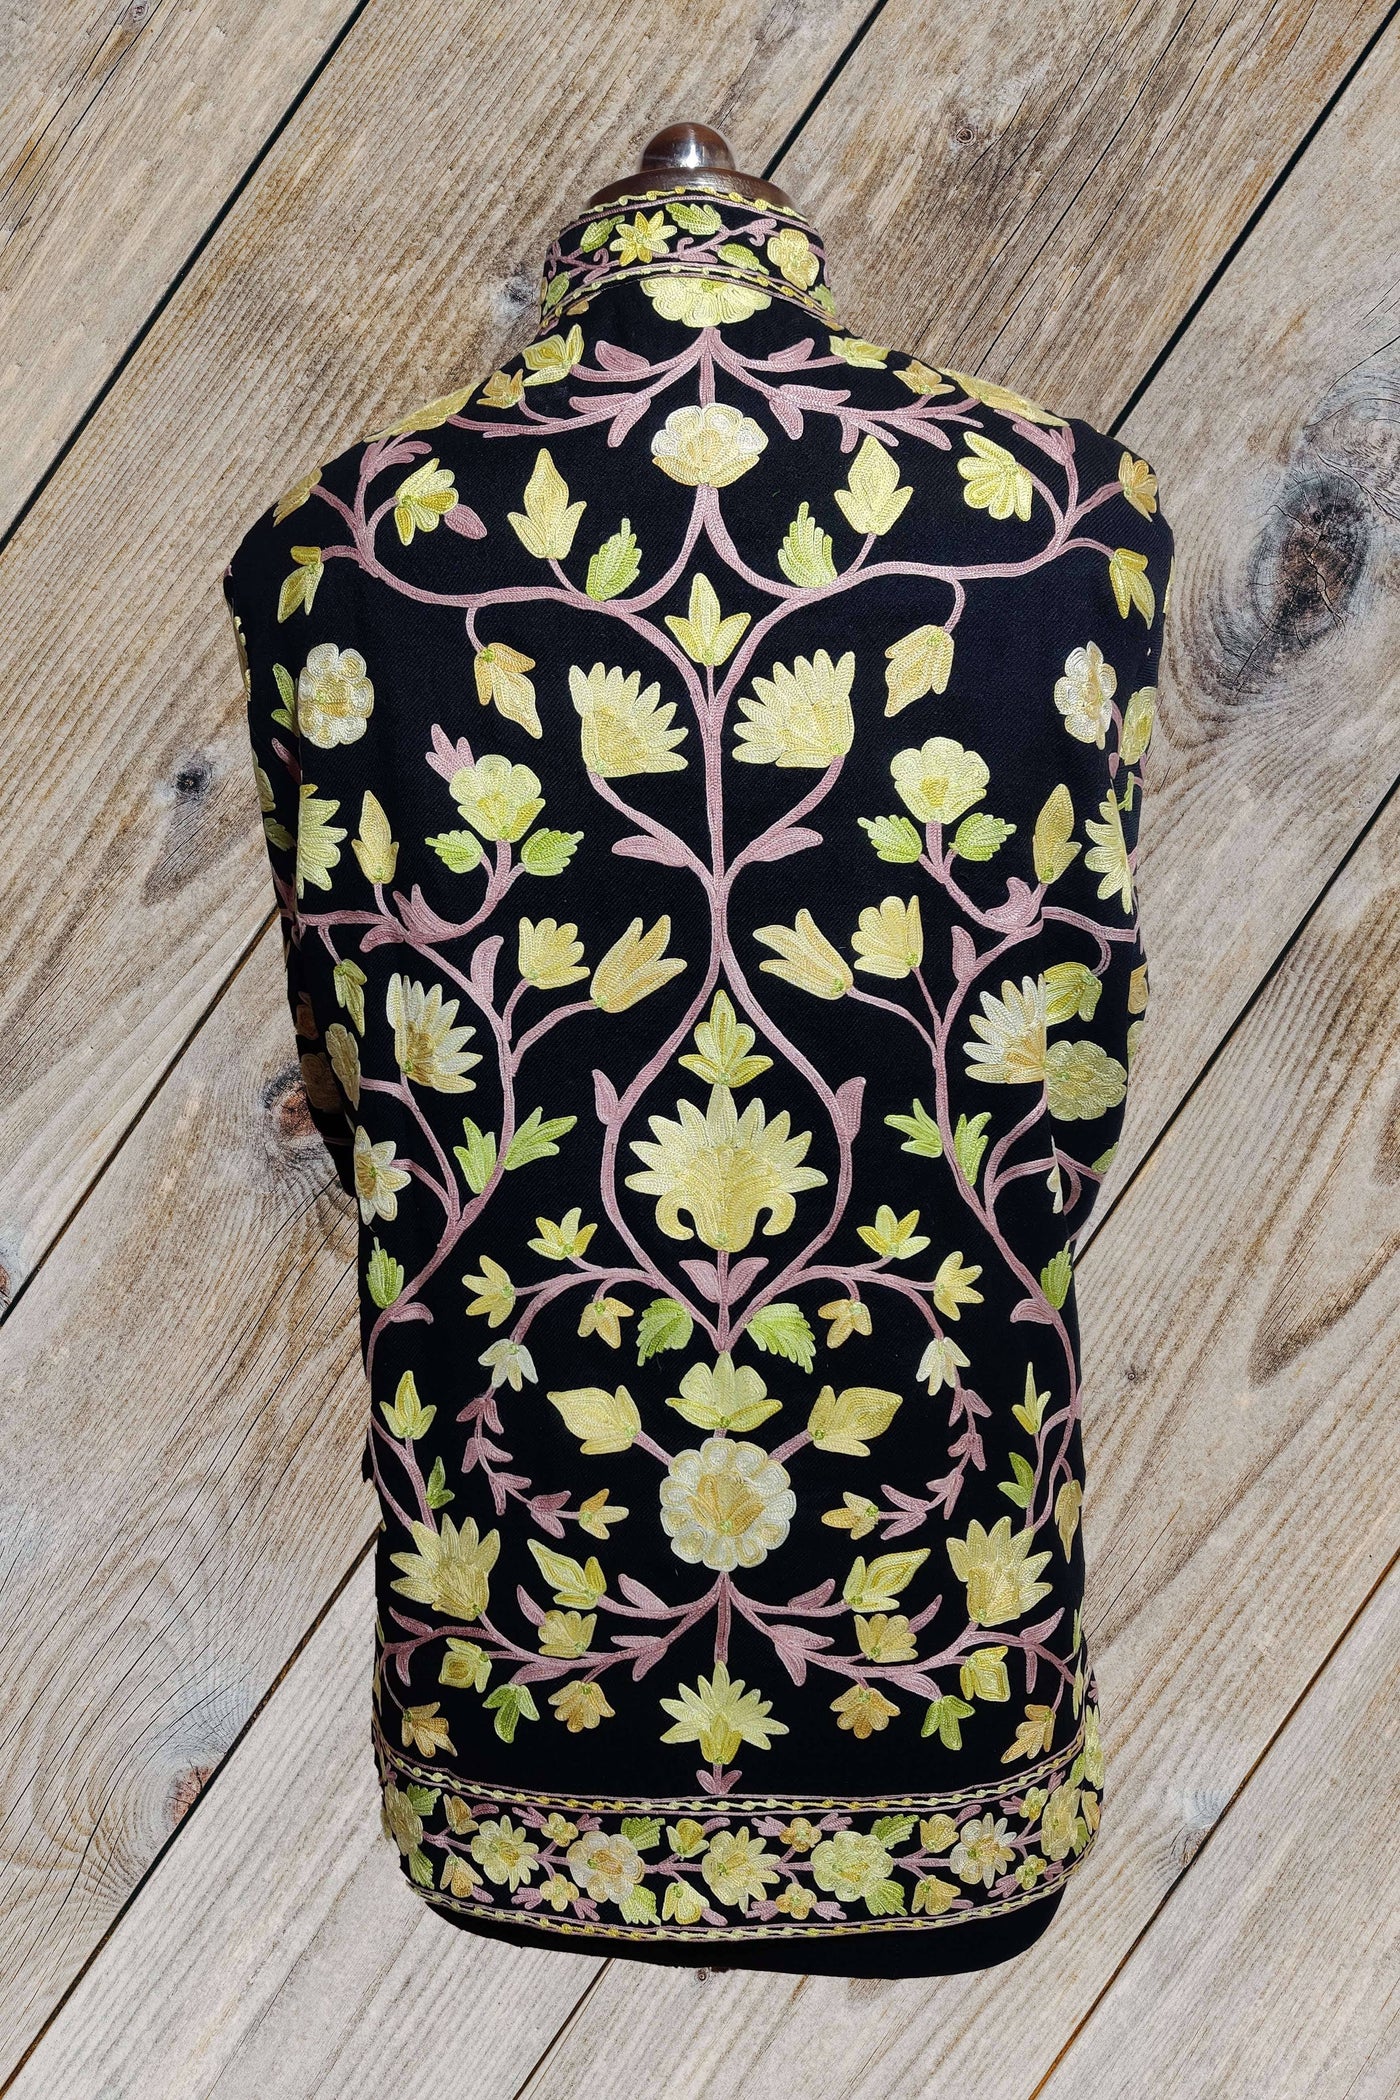 Kashmir Thread Coat XXL (46) Kashmiri Woolen Jacket With Floral Multi-Color Embroidery